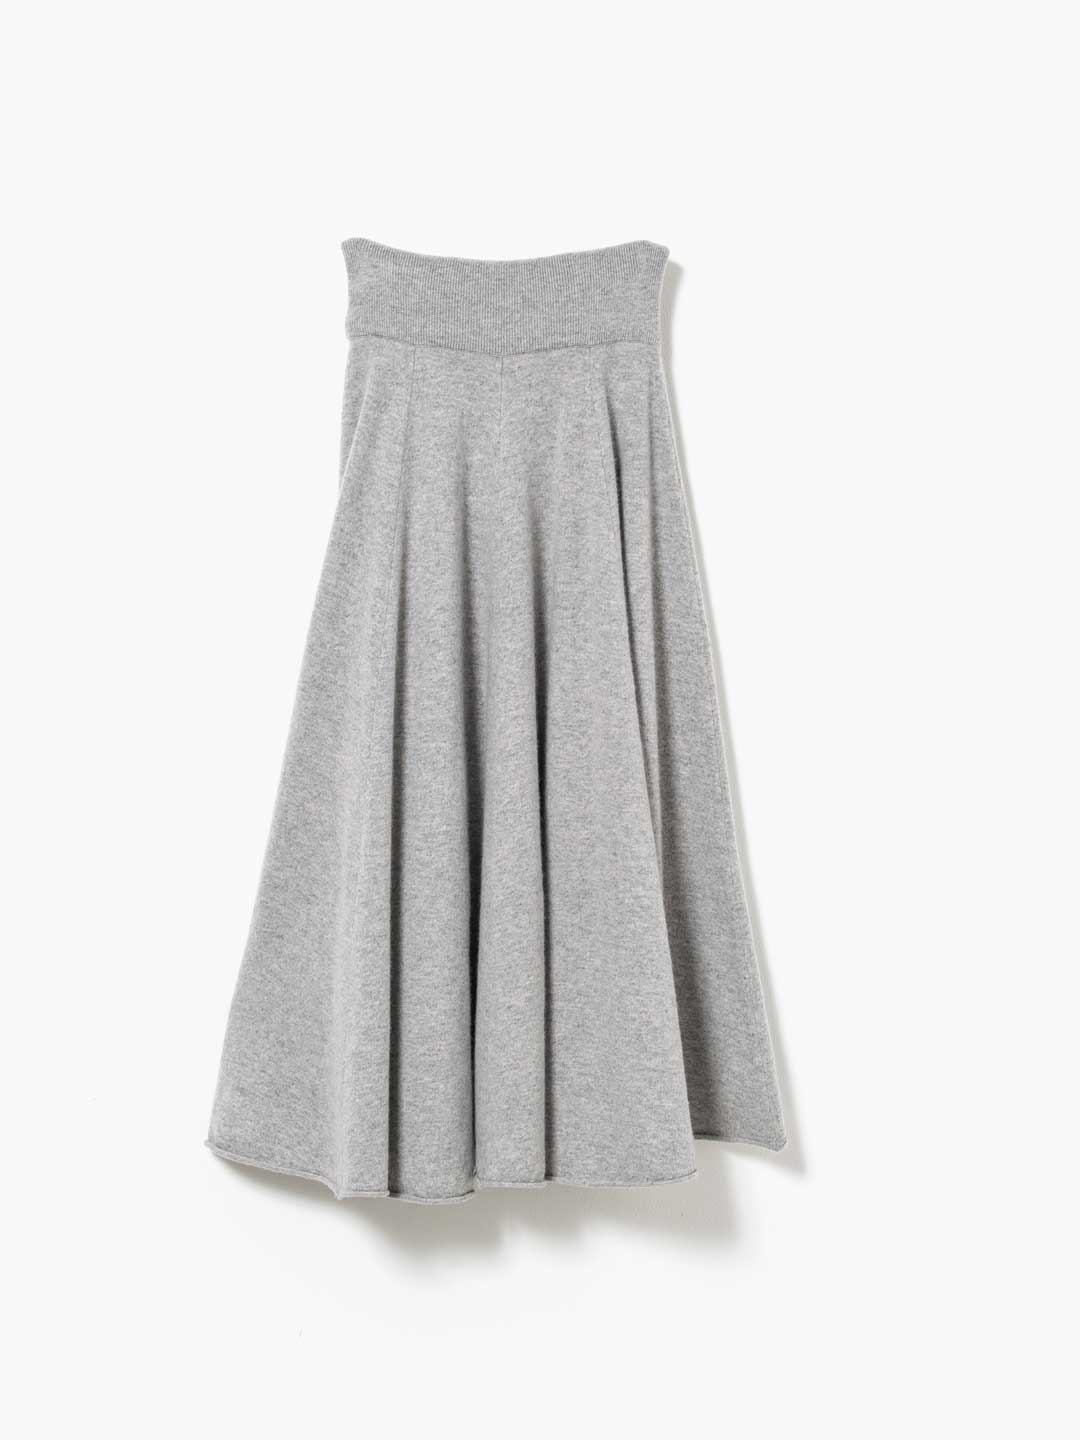 Twirl Knit Skirt - Grey